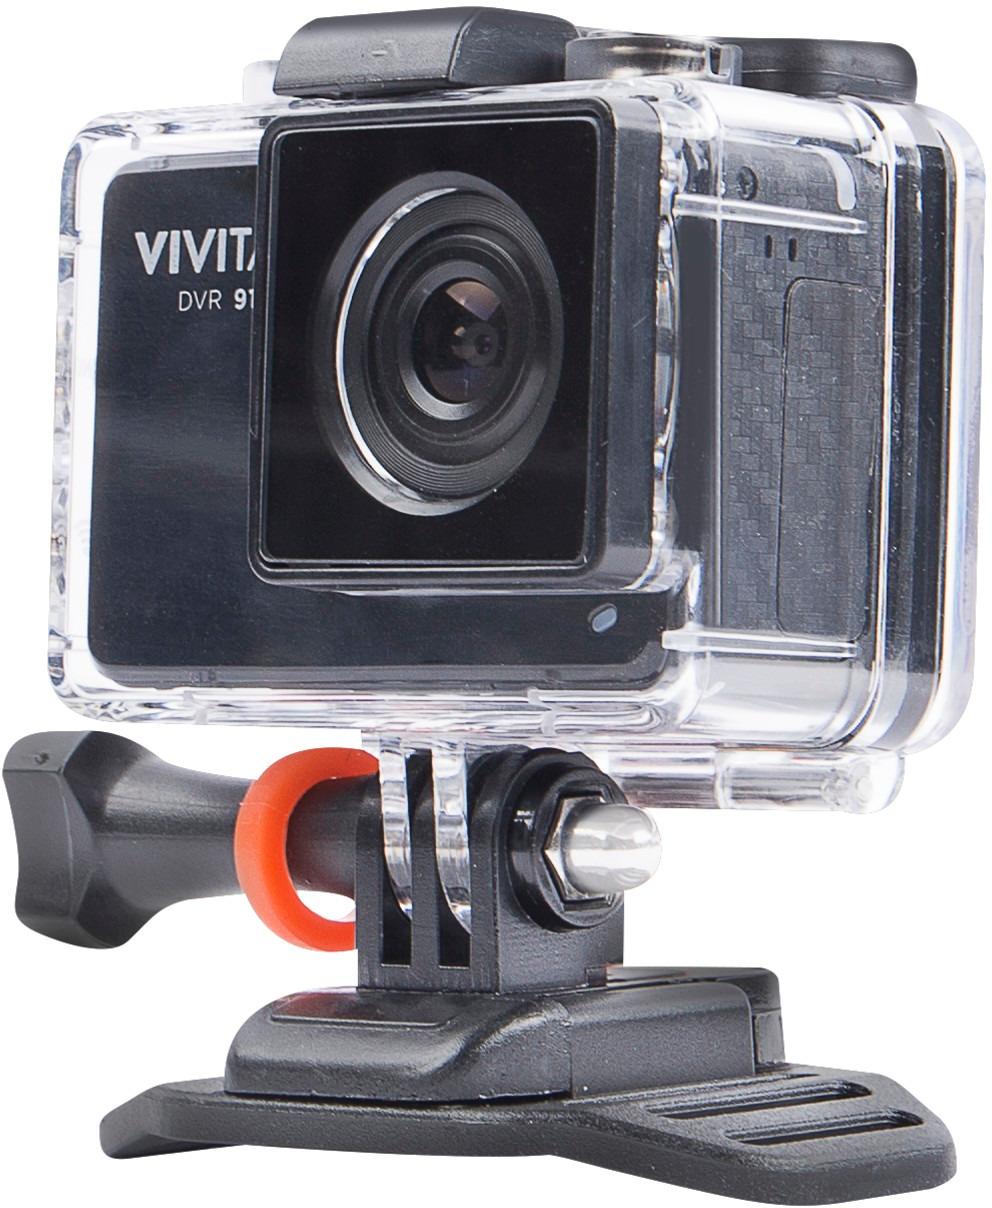 vivitar waterproof 4k wifi action camera